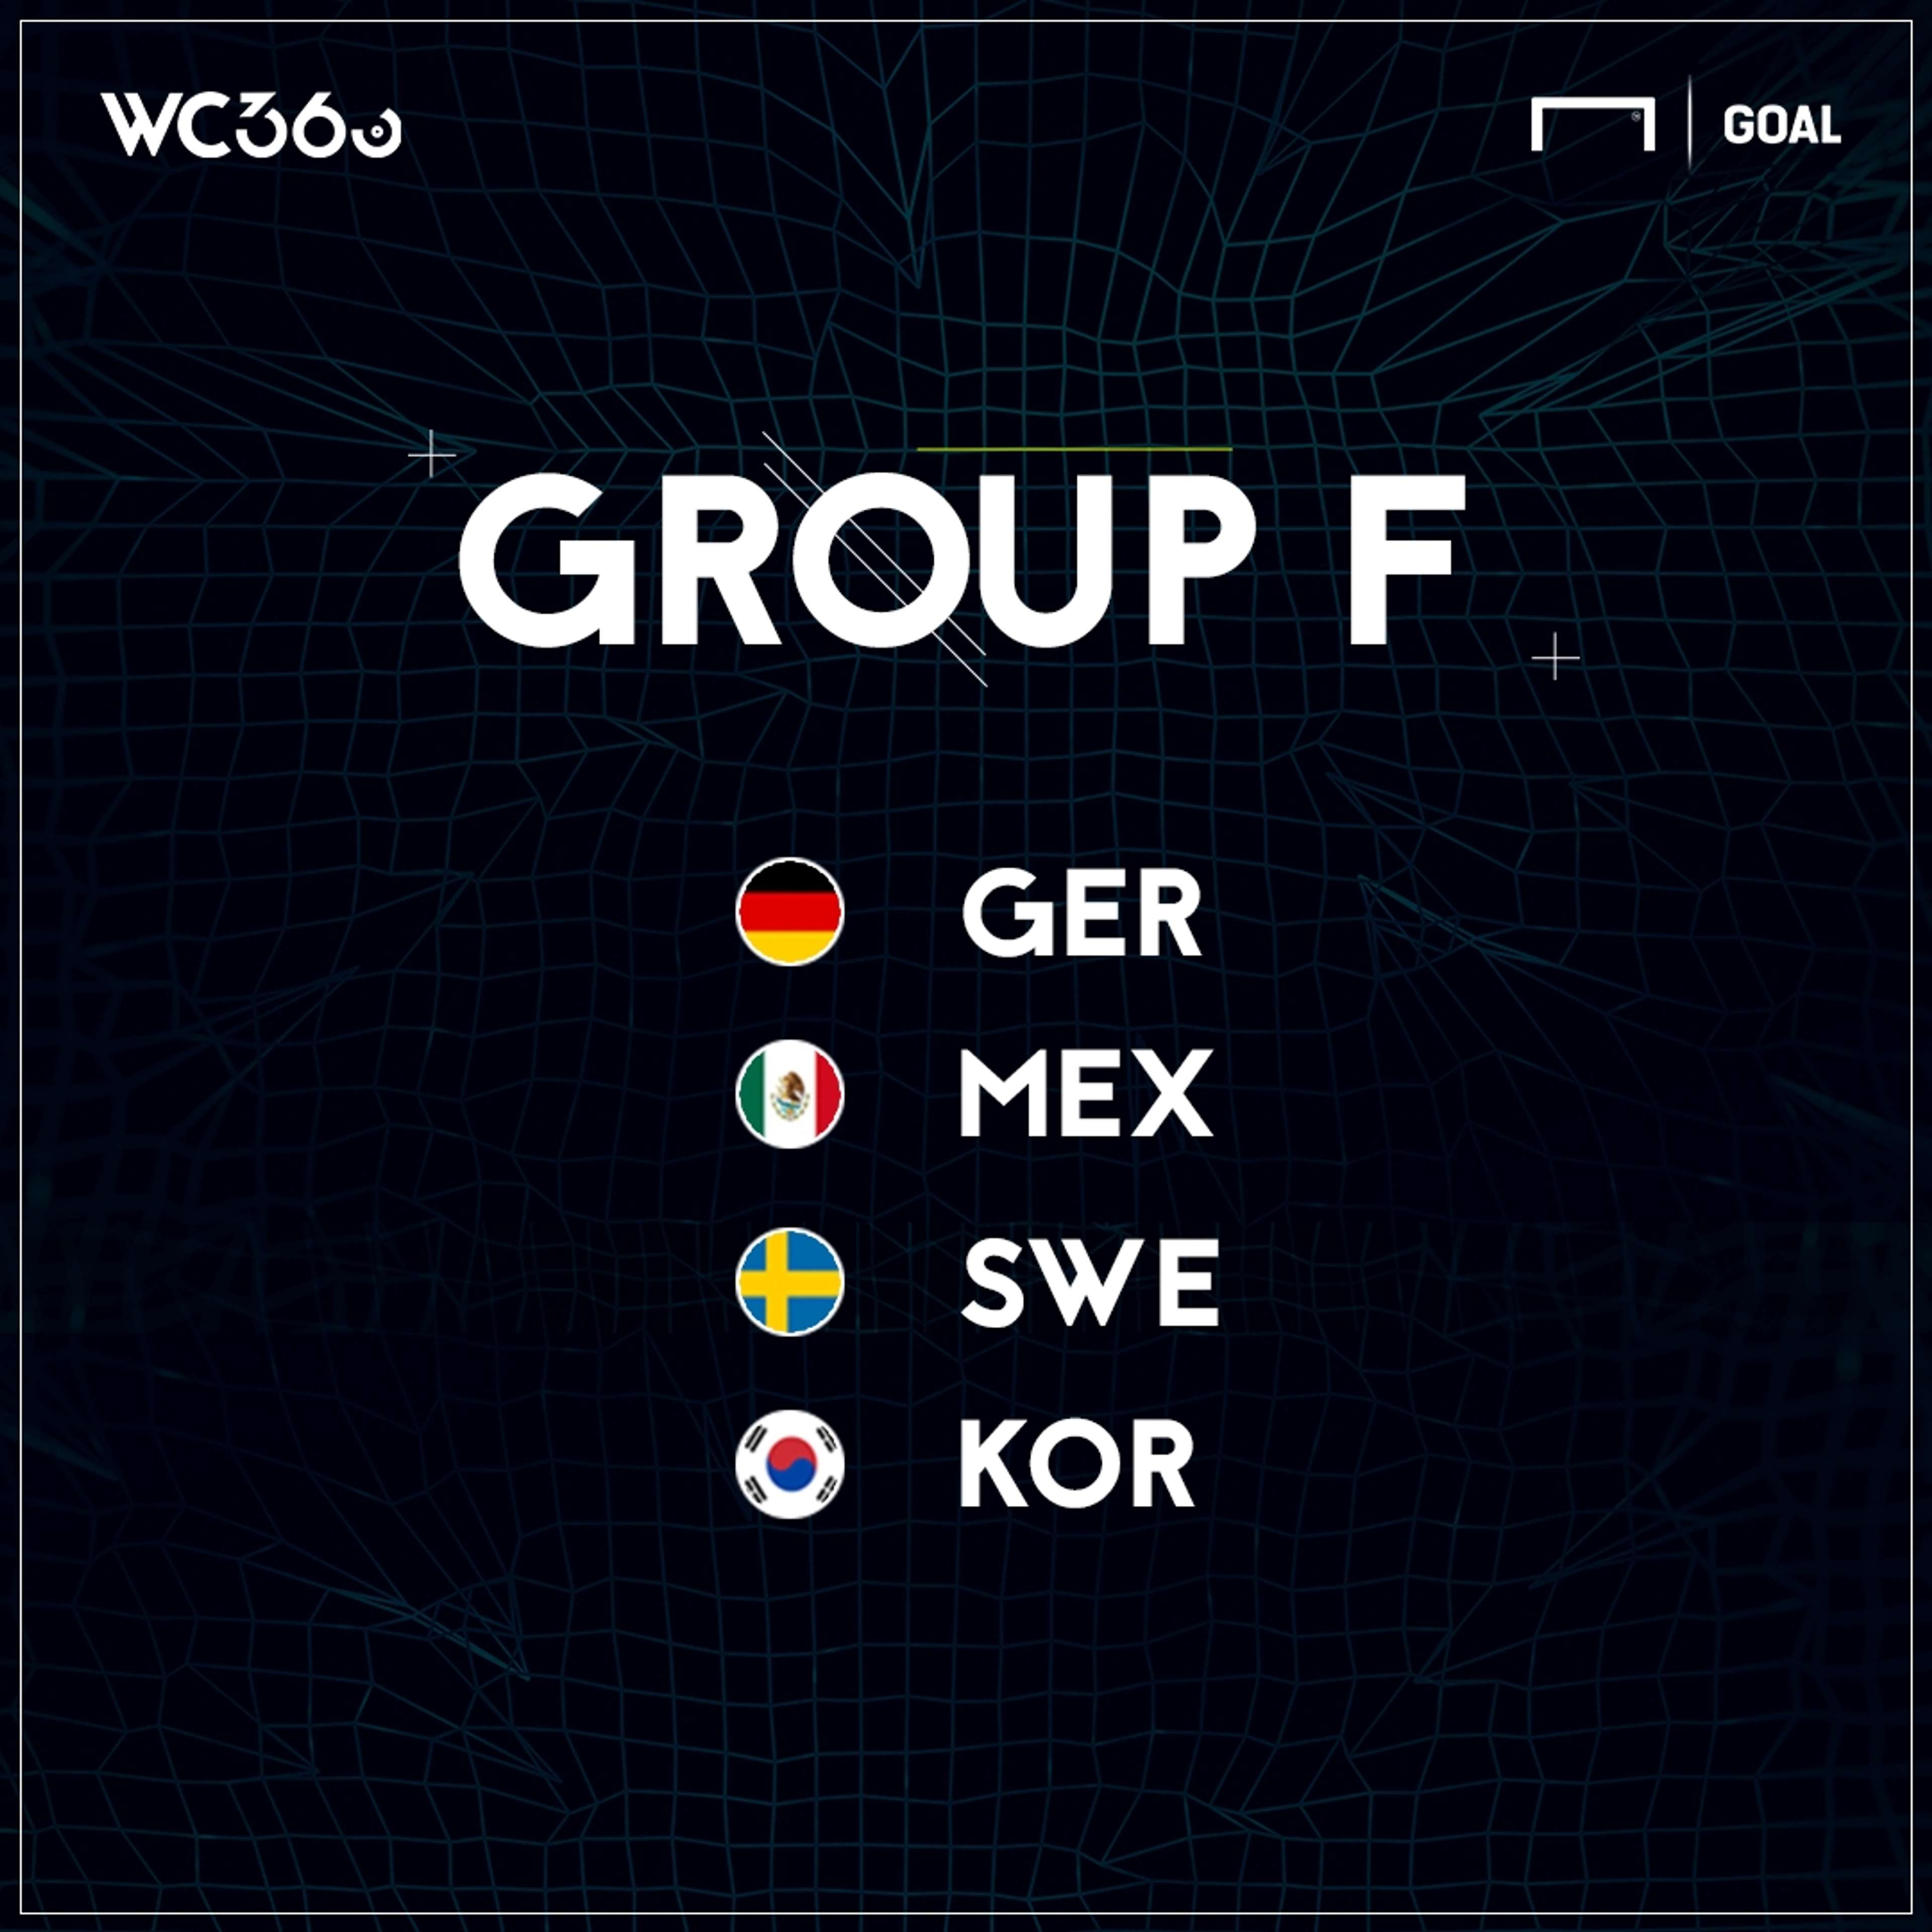 Group F